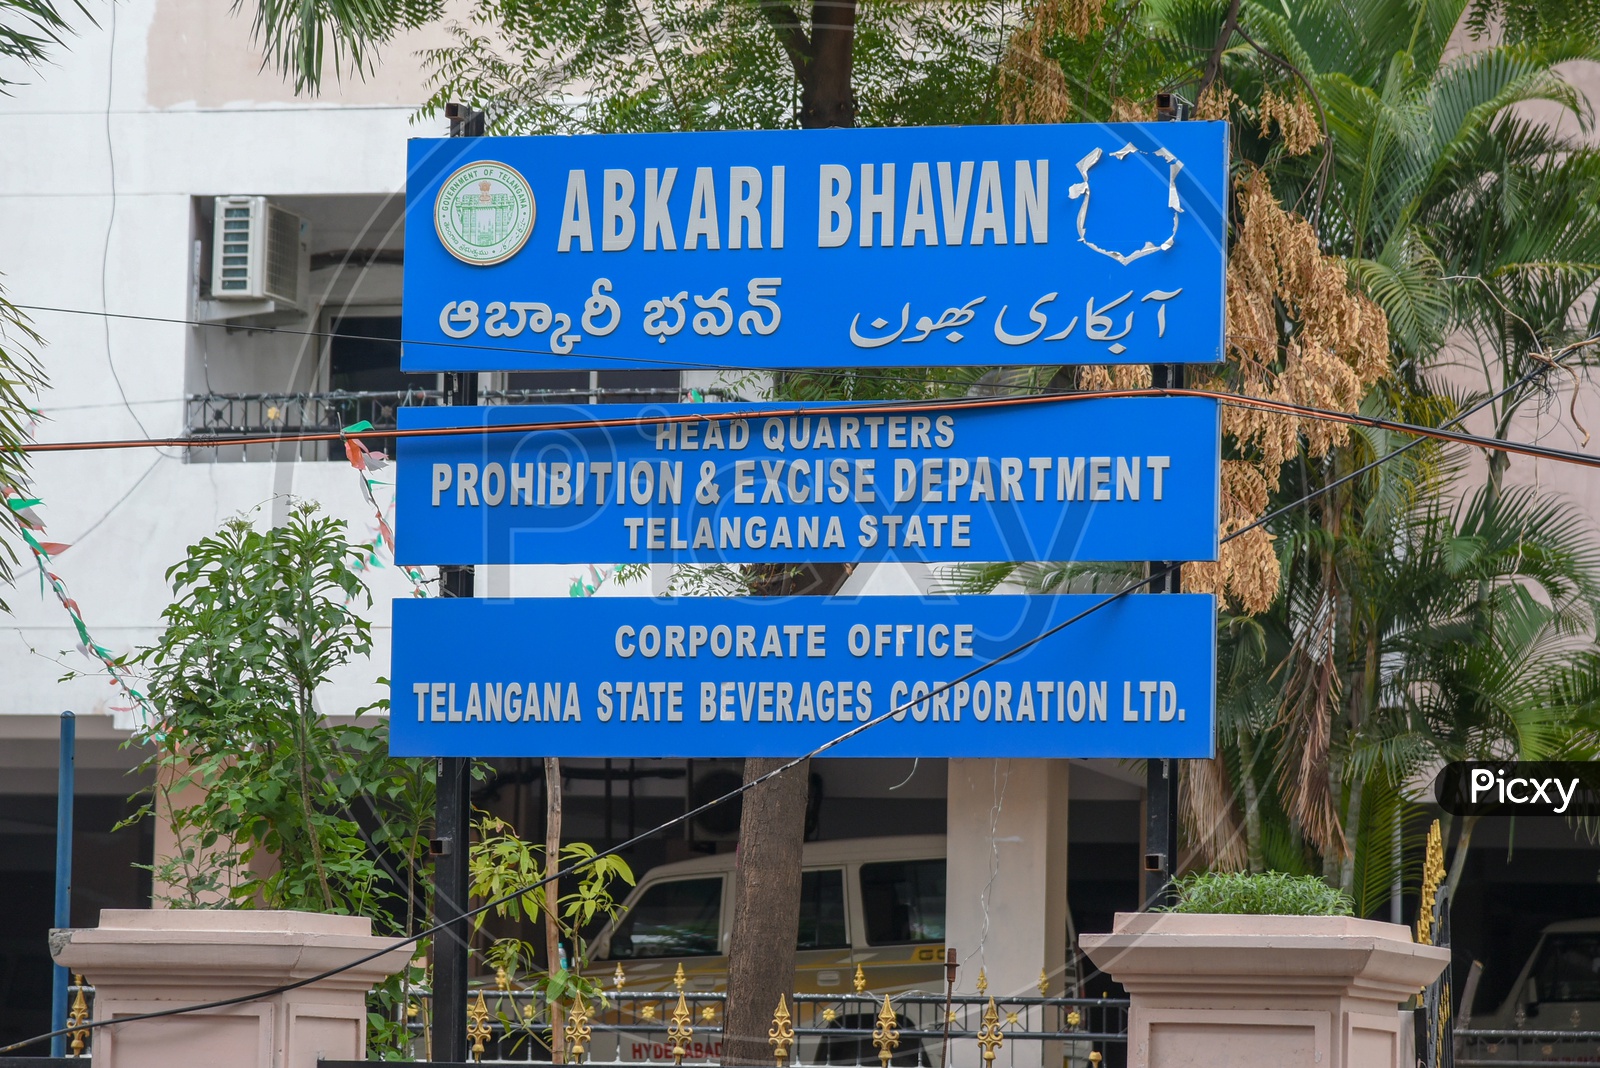 Abkari Bhavan / Prohibition & Excise Dept. Telangana